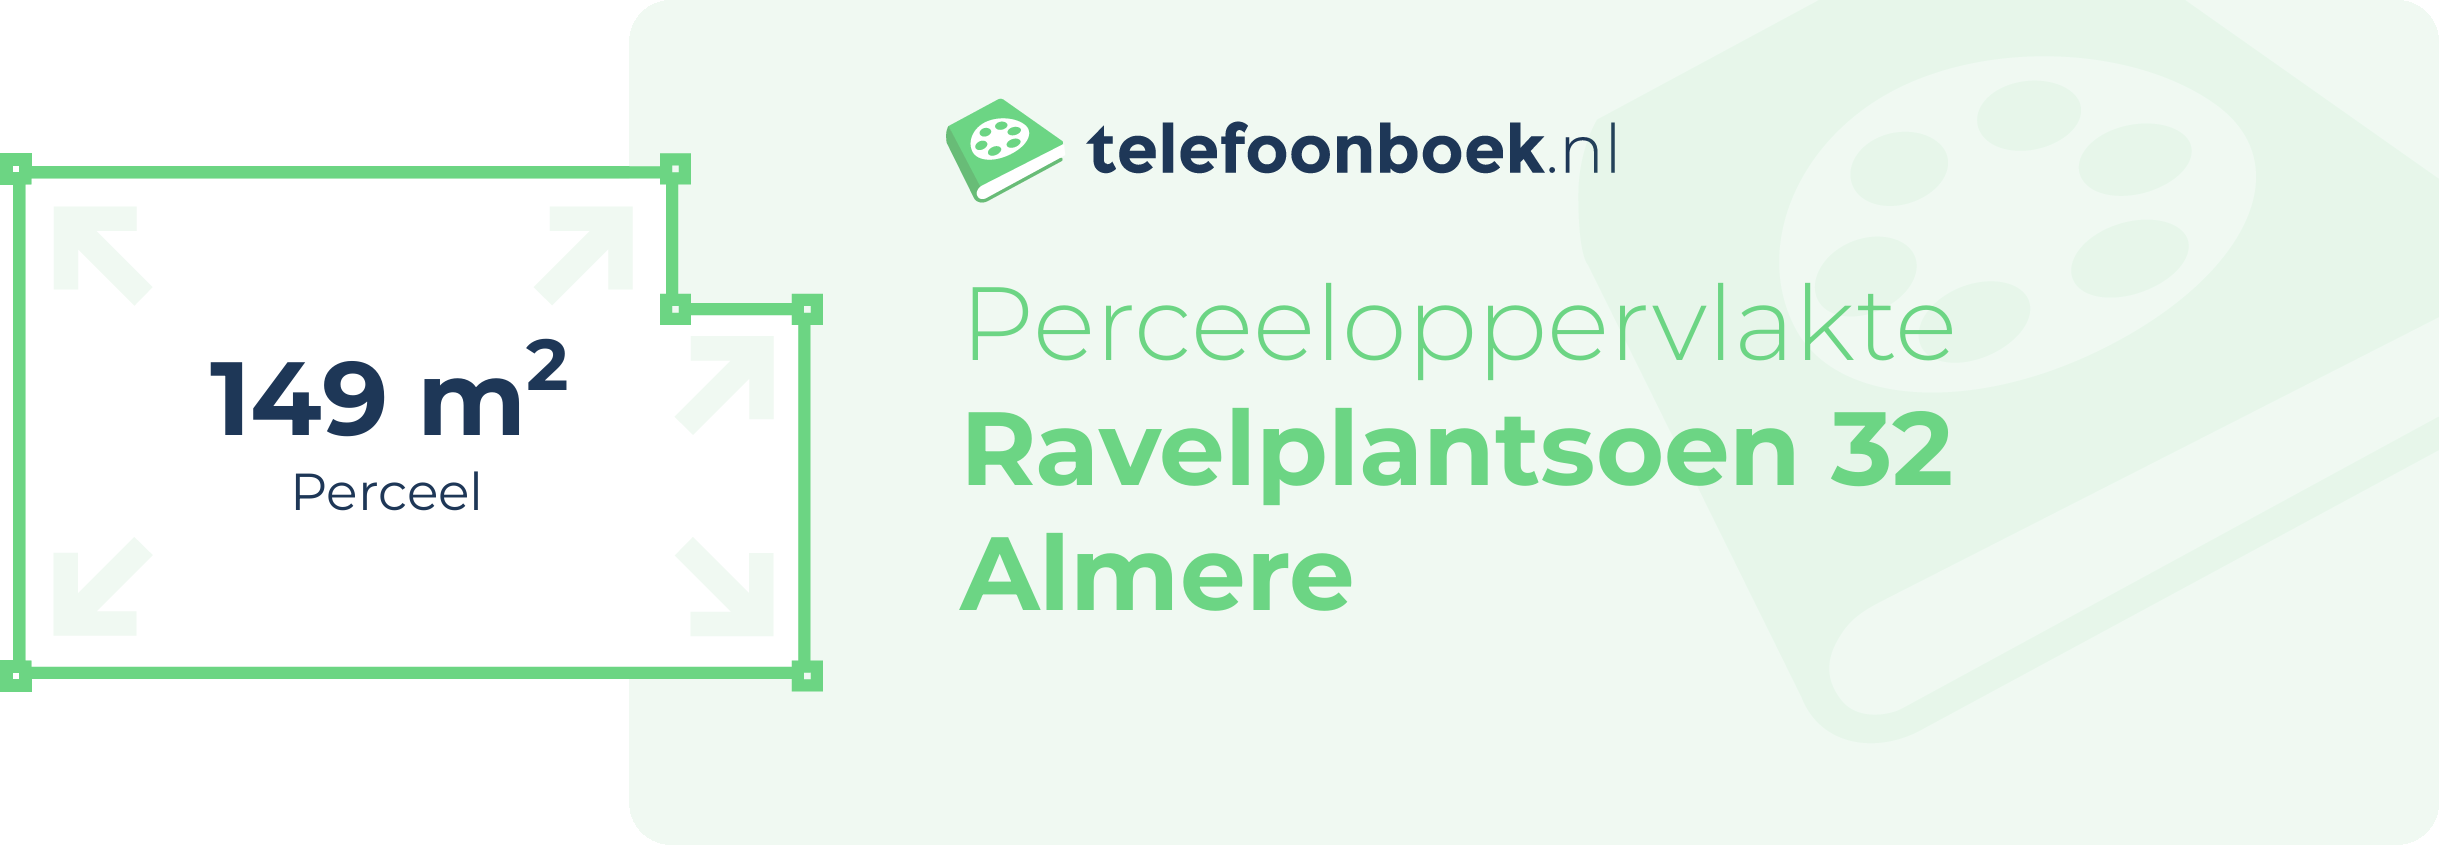 Perceeloppervlakte Ravelplantsoen 32 Almere